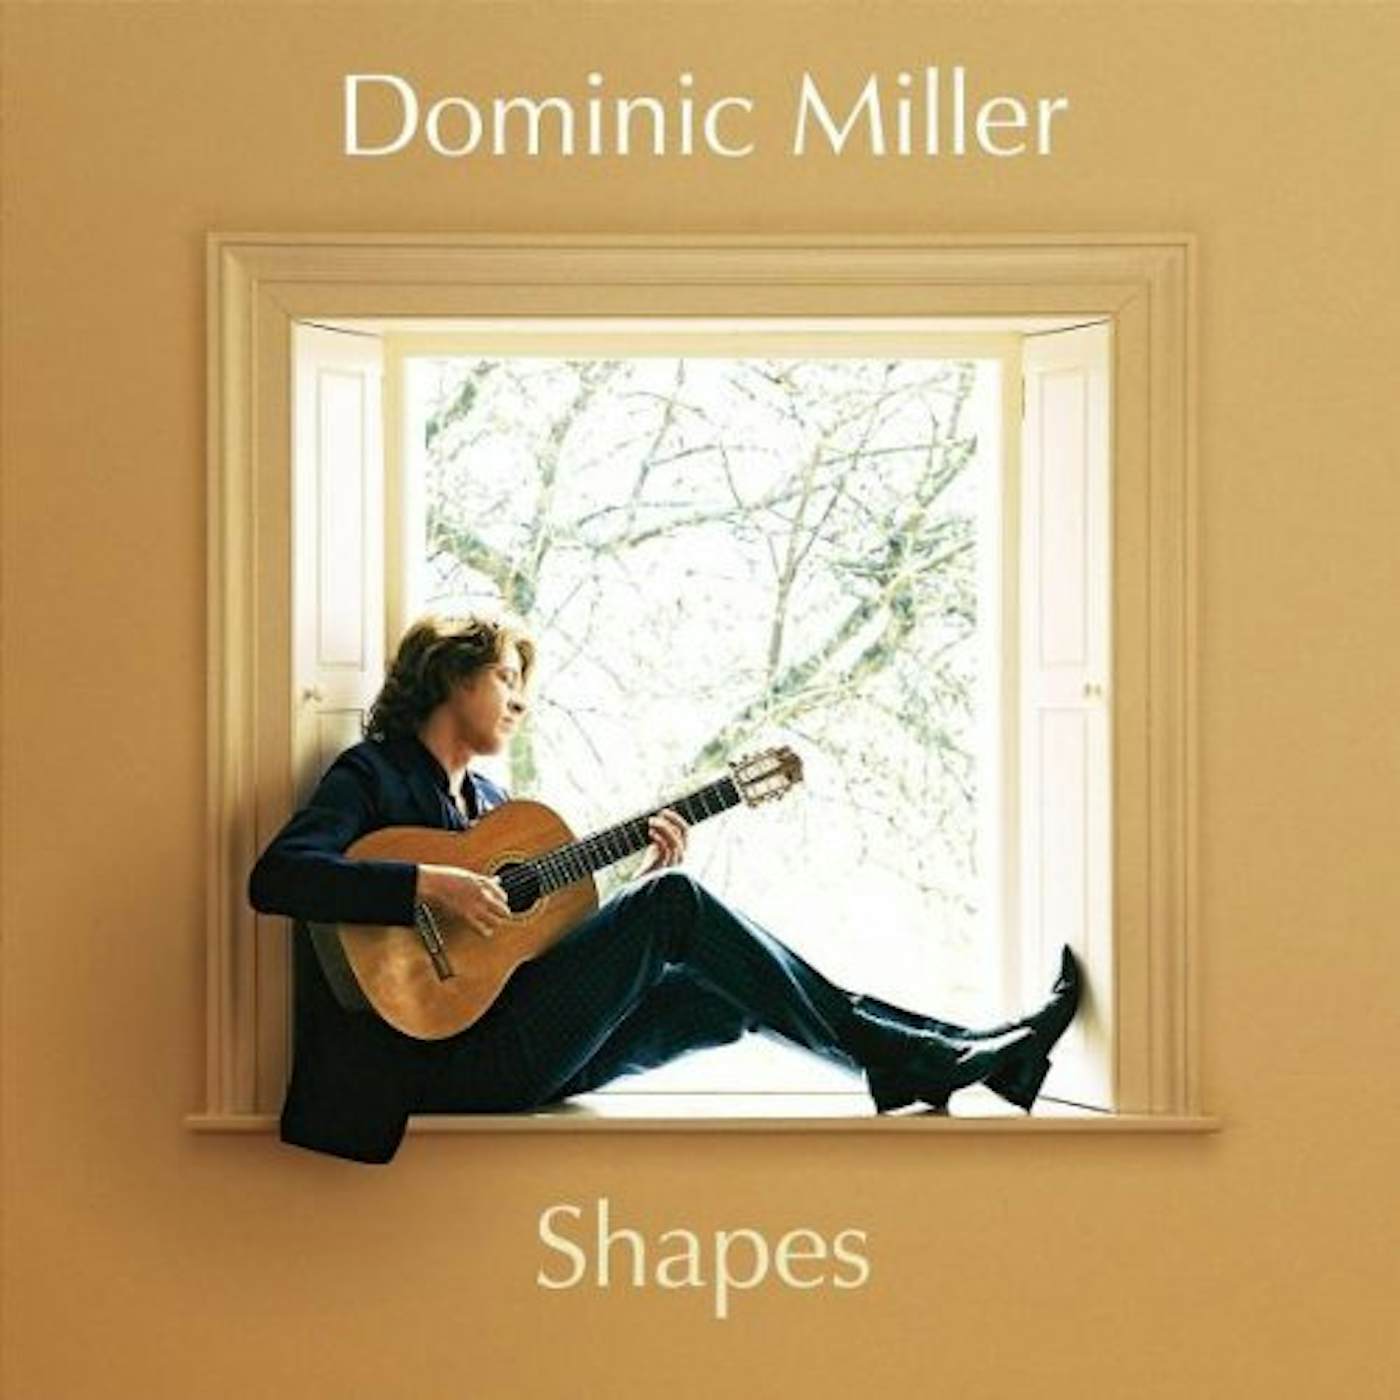 Dominic Miller SHAPES CD